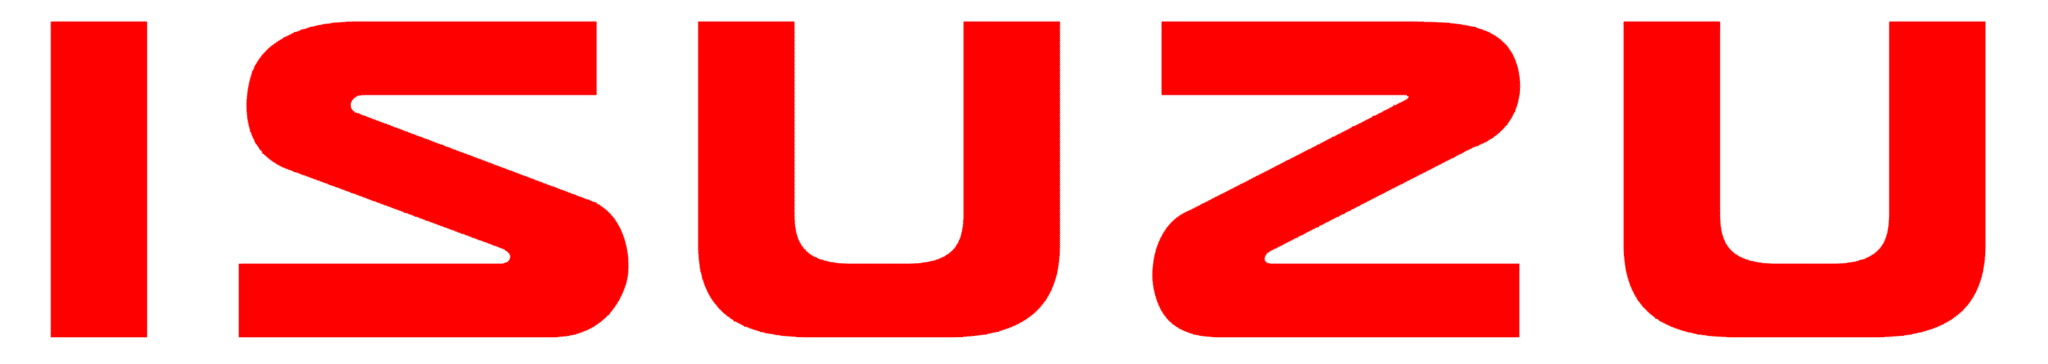 Isuzu-logo-1991-3840x2160-grand (1)